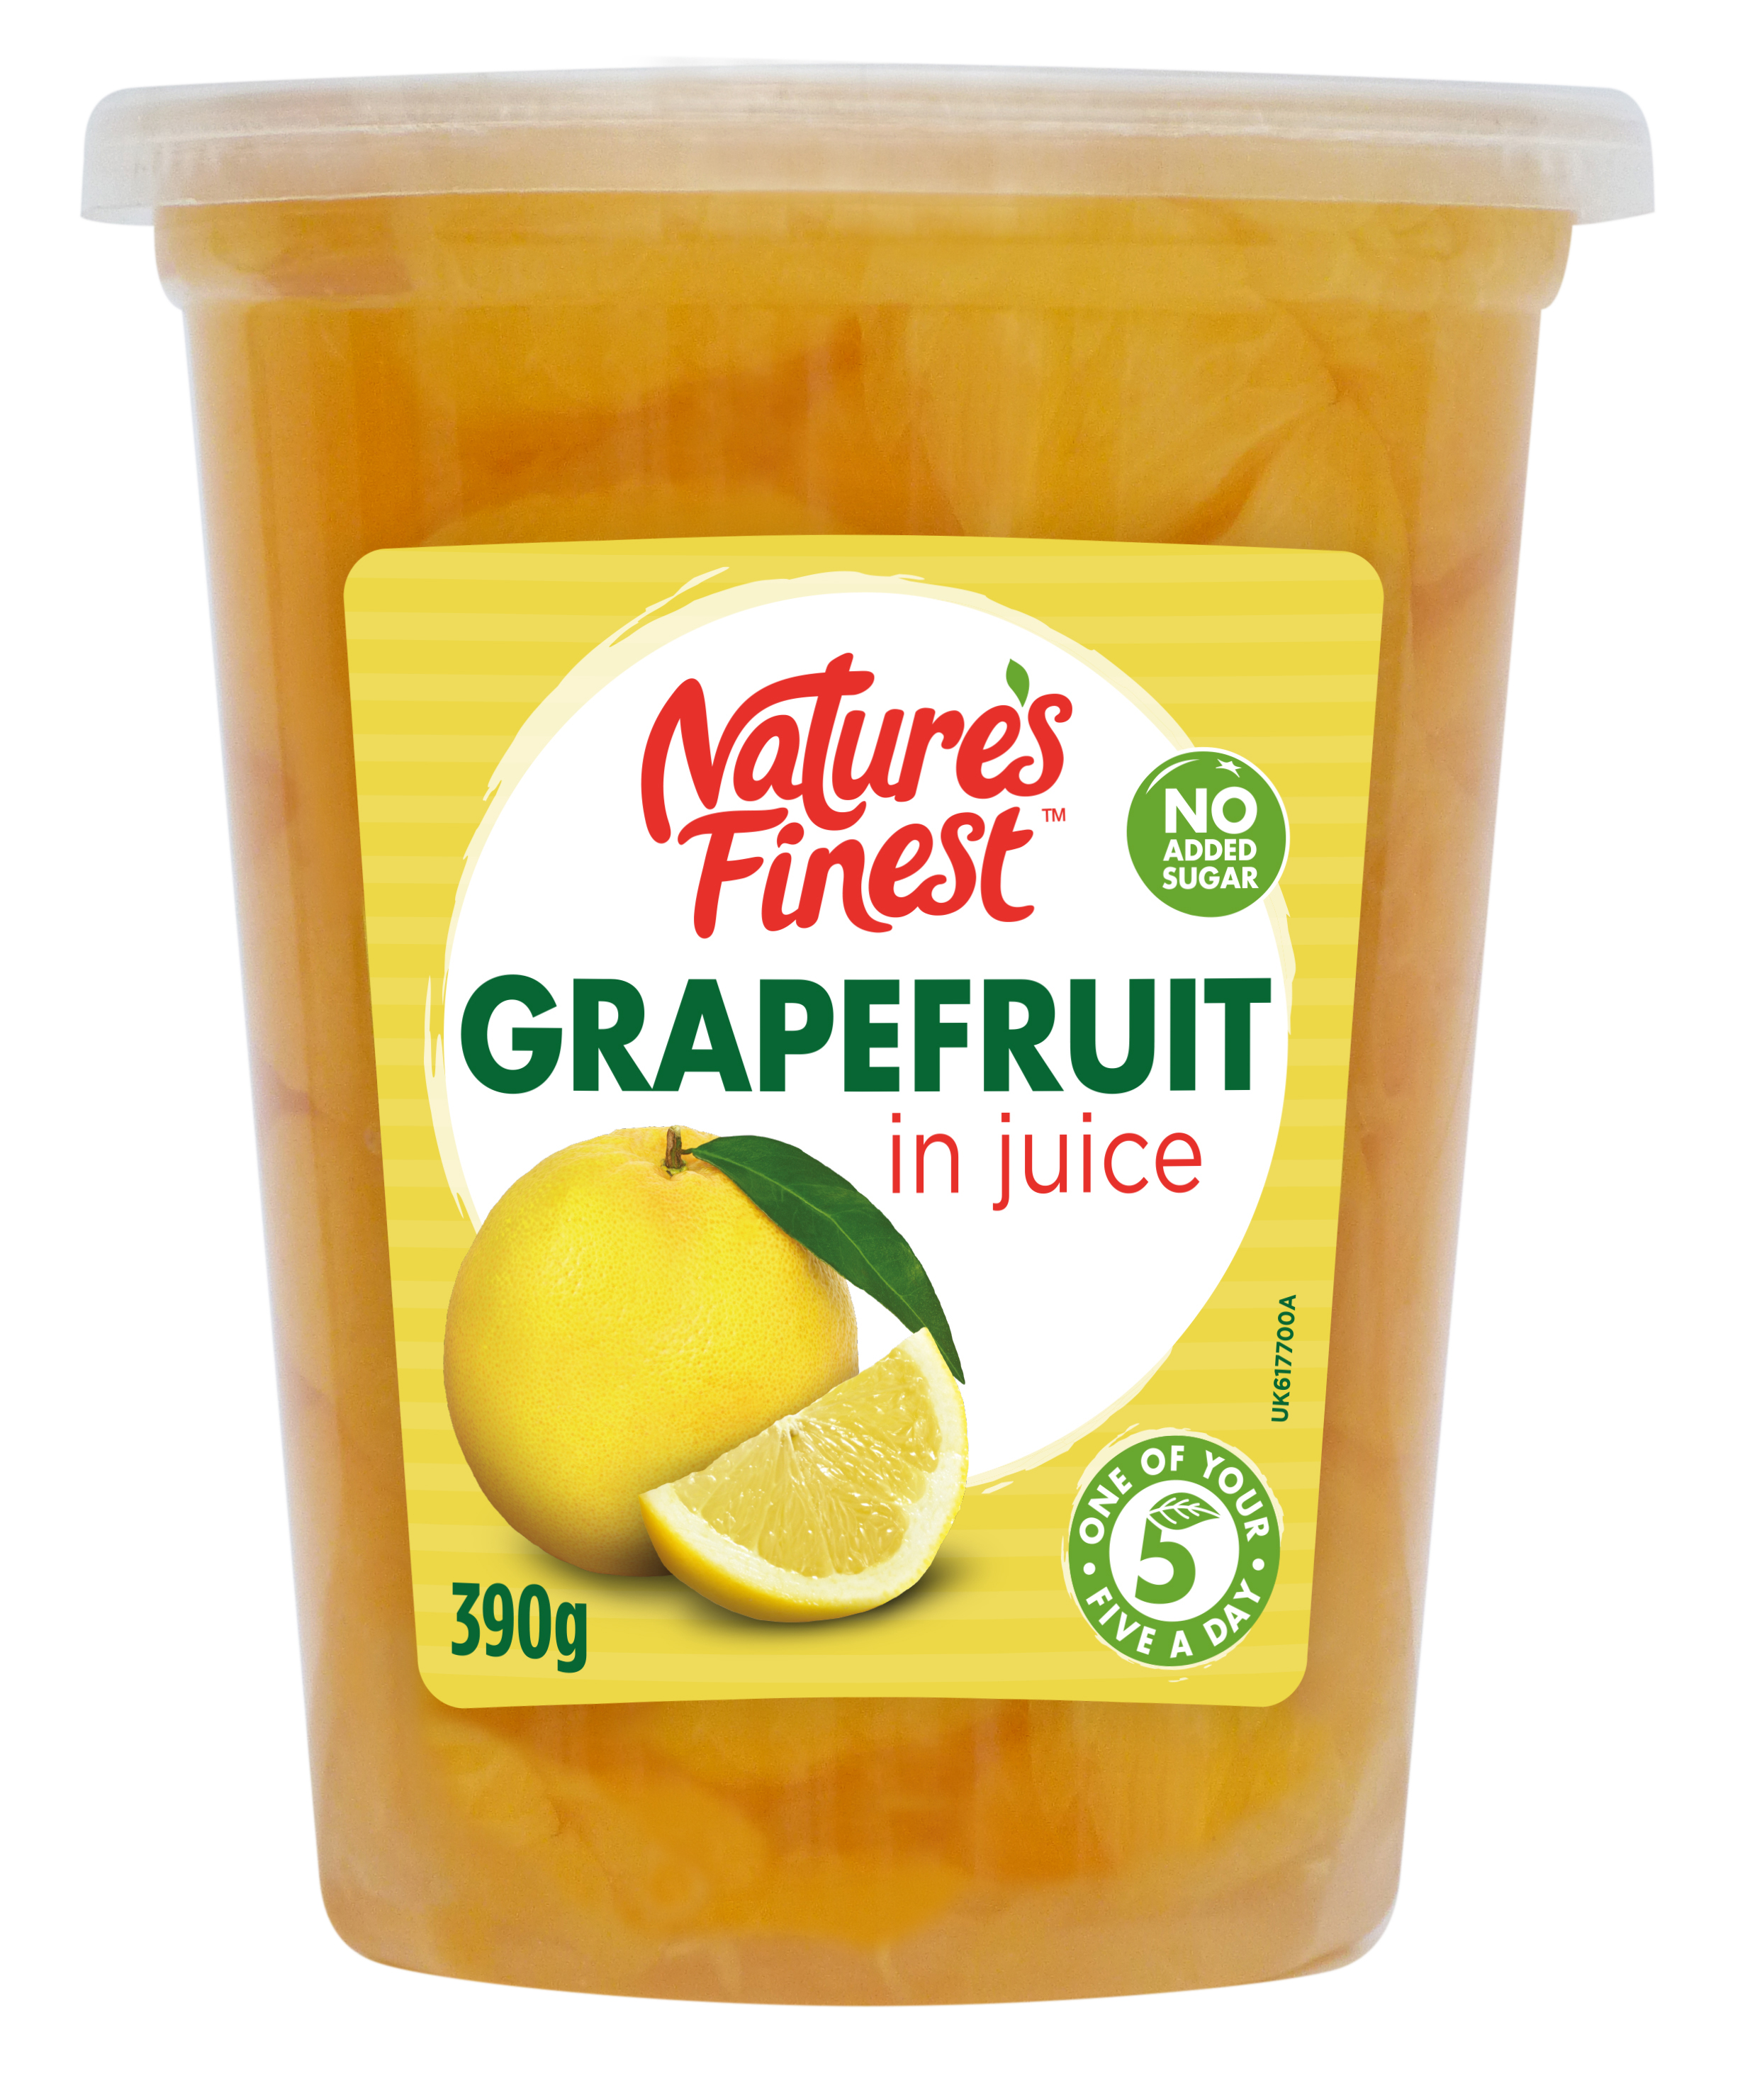 Nature's Finest launch new Grapefruit variant